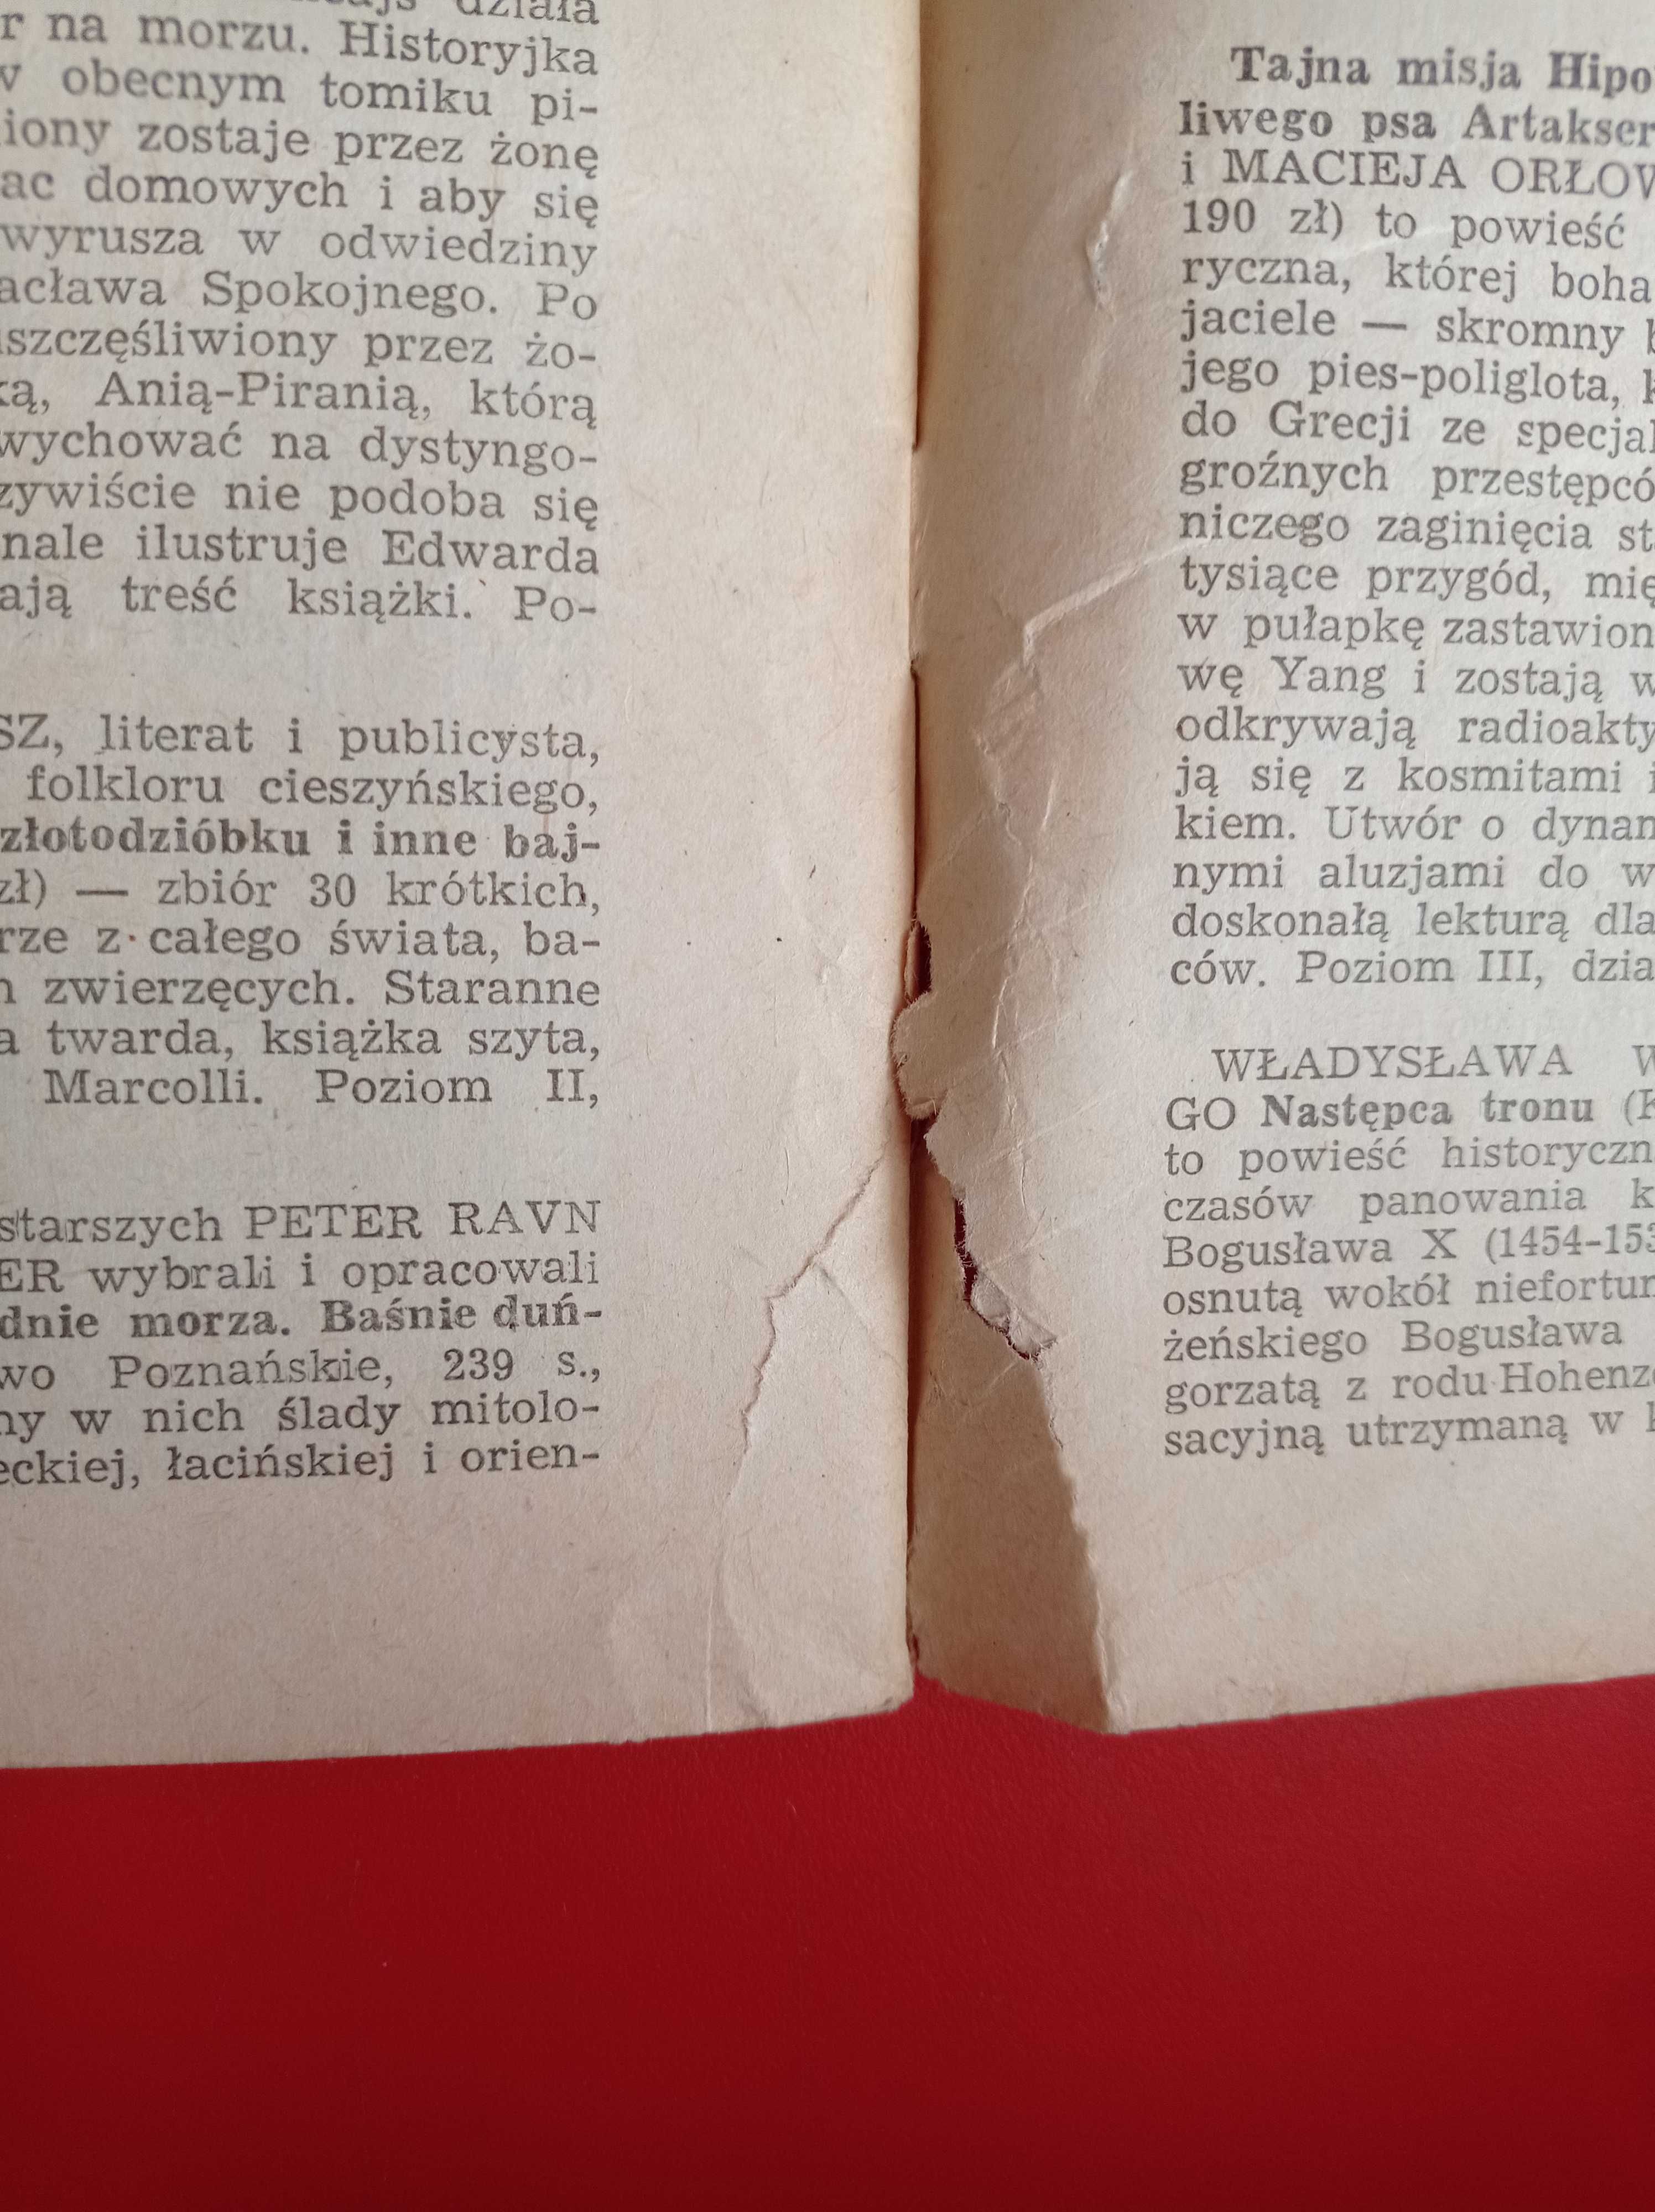 Poradnik Bibliotekarza, nr 5/1987, maj 1987